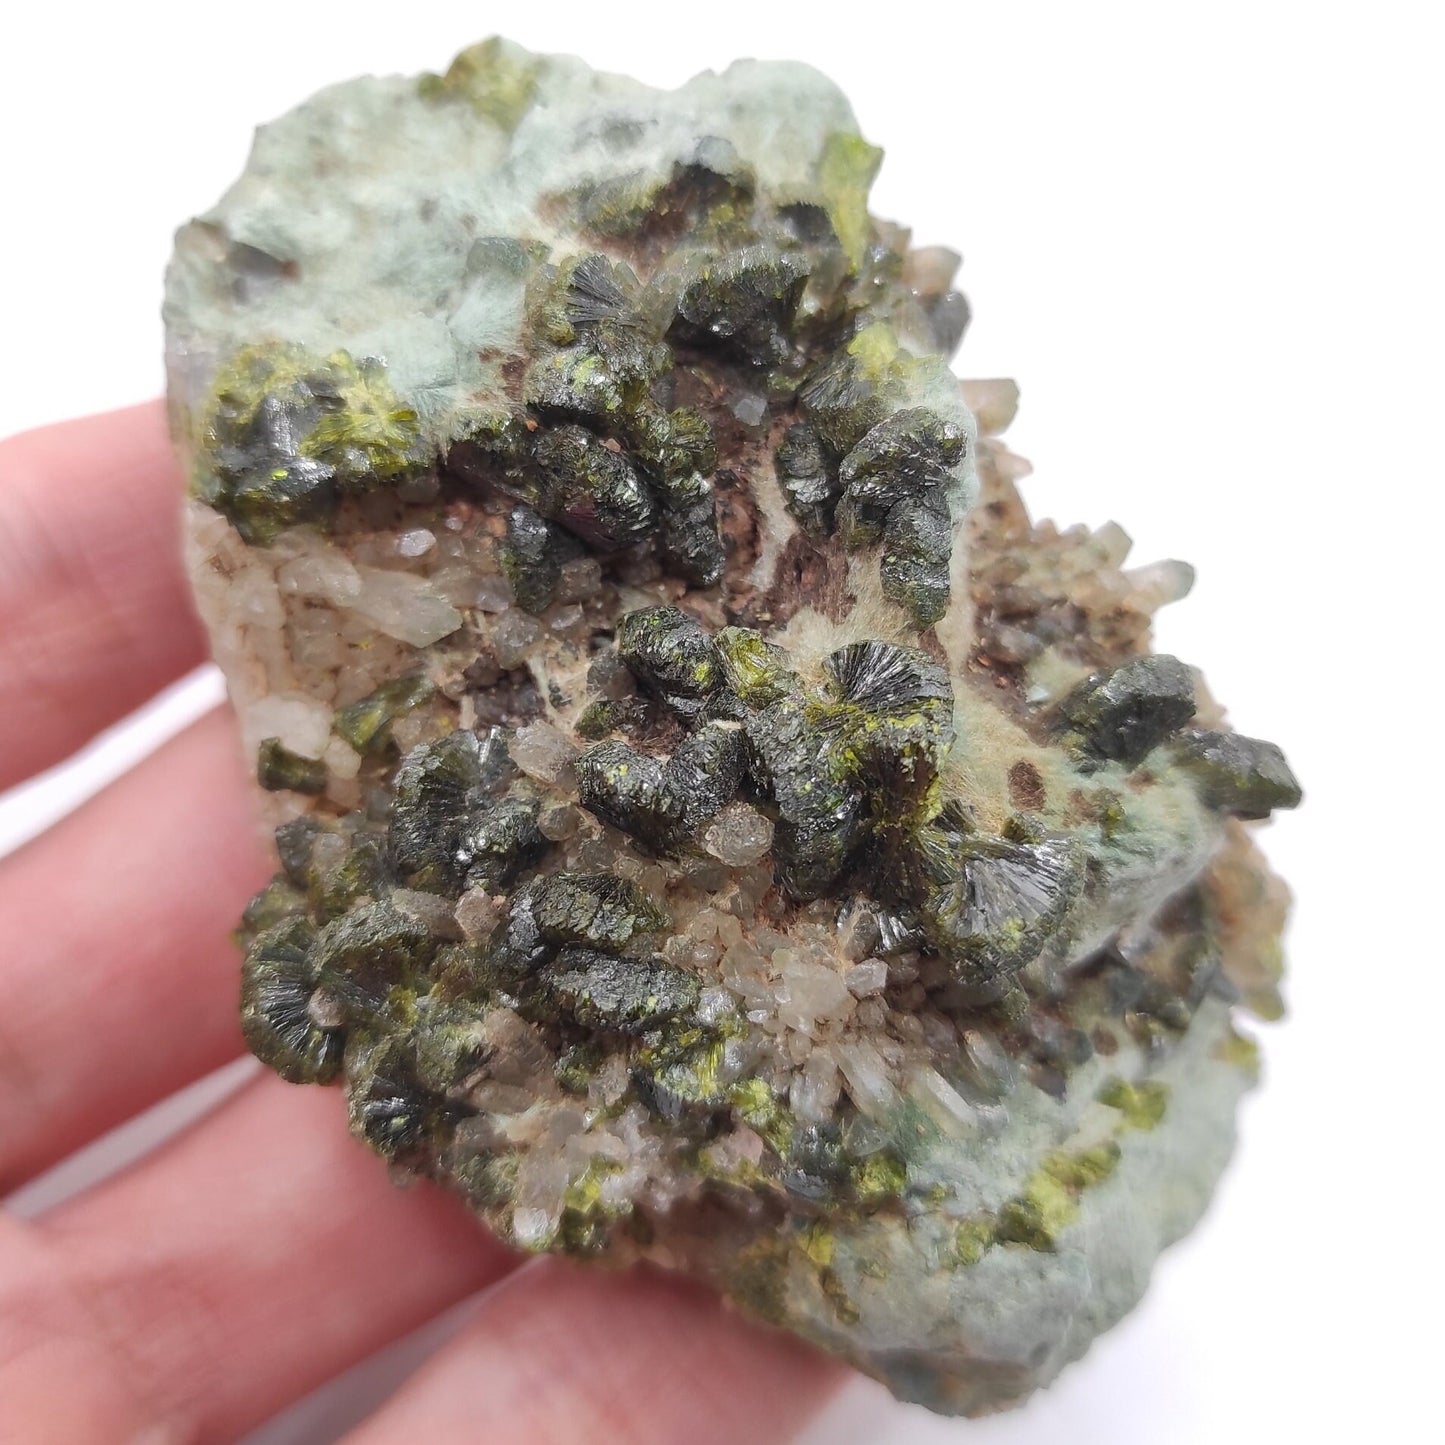 144g Epidote with Quartz - Imilchil, Morocco - Green Epidote Crystal Cluster - Raw Mineral Specimen - Green Epidote and Quartz Crystal